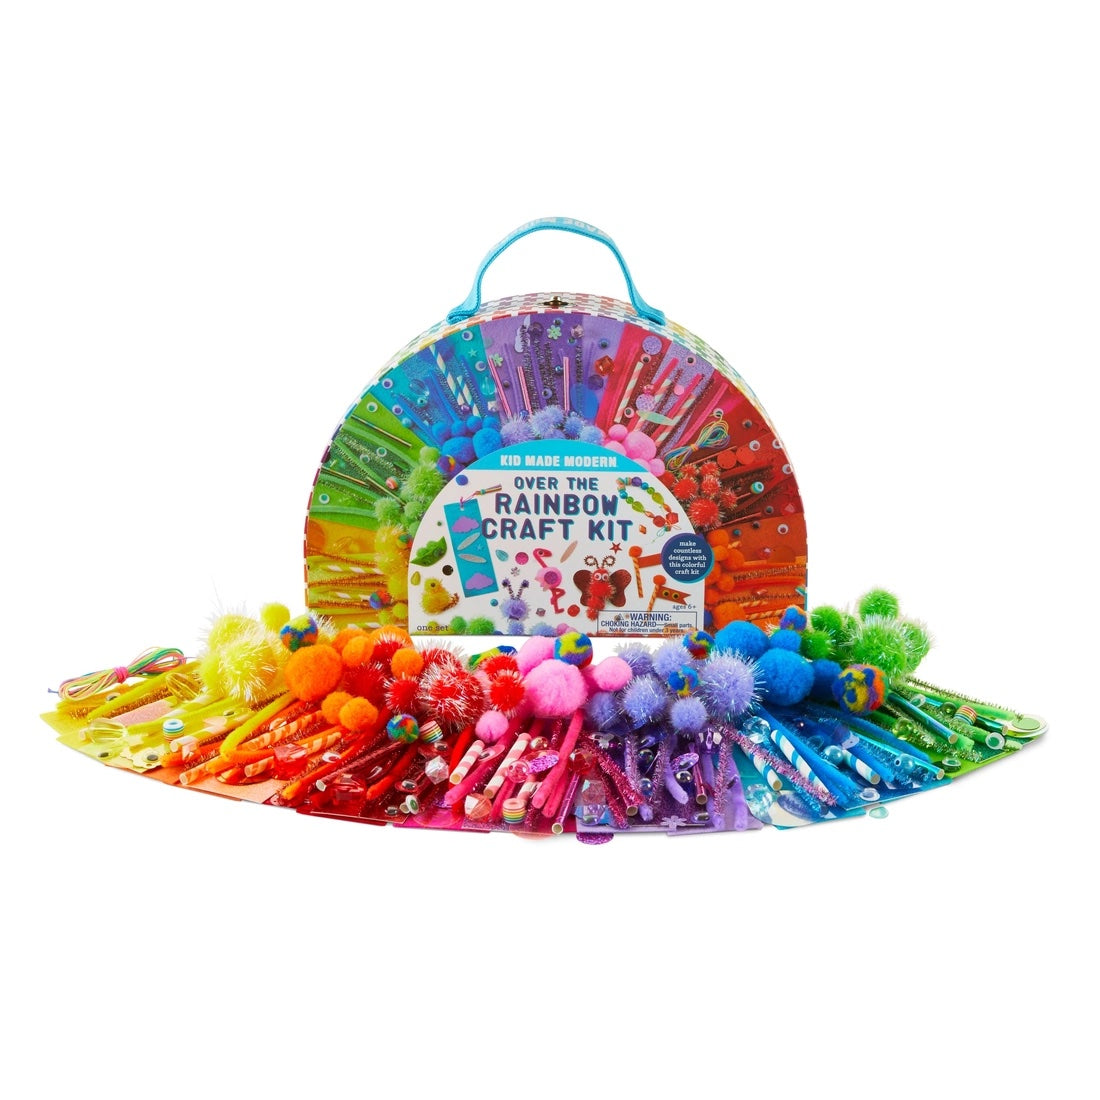 Highlights Rainbow Yarn Art Craft Kit for Kids, Create Rainbow Wall Art and Pom